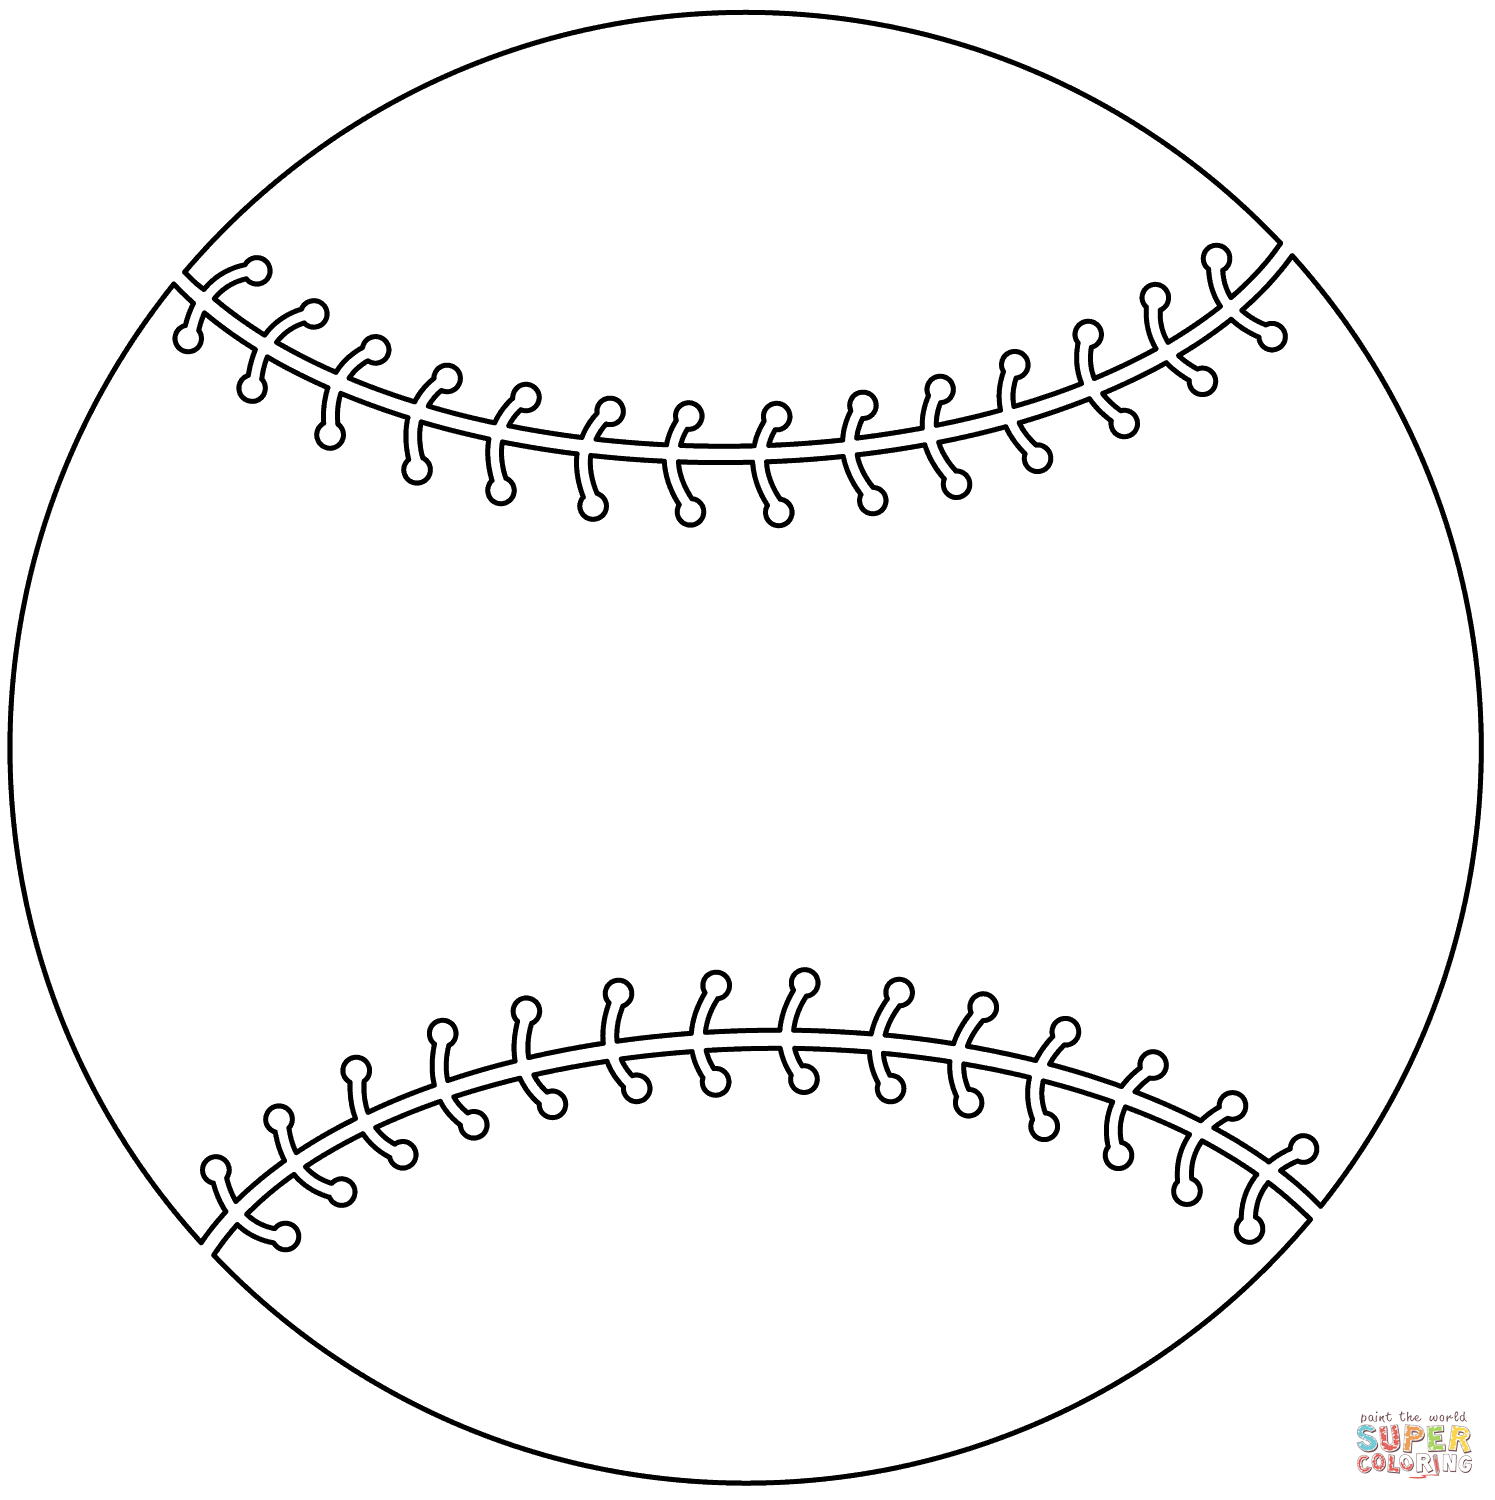 Baseball Bat and Ball coloring page | Free Printable Coloring Pages